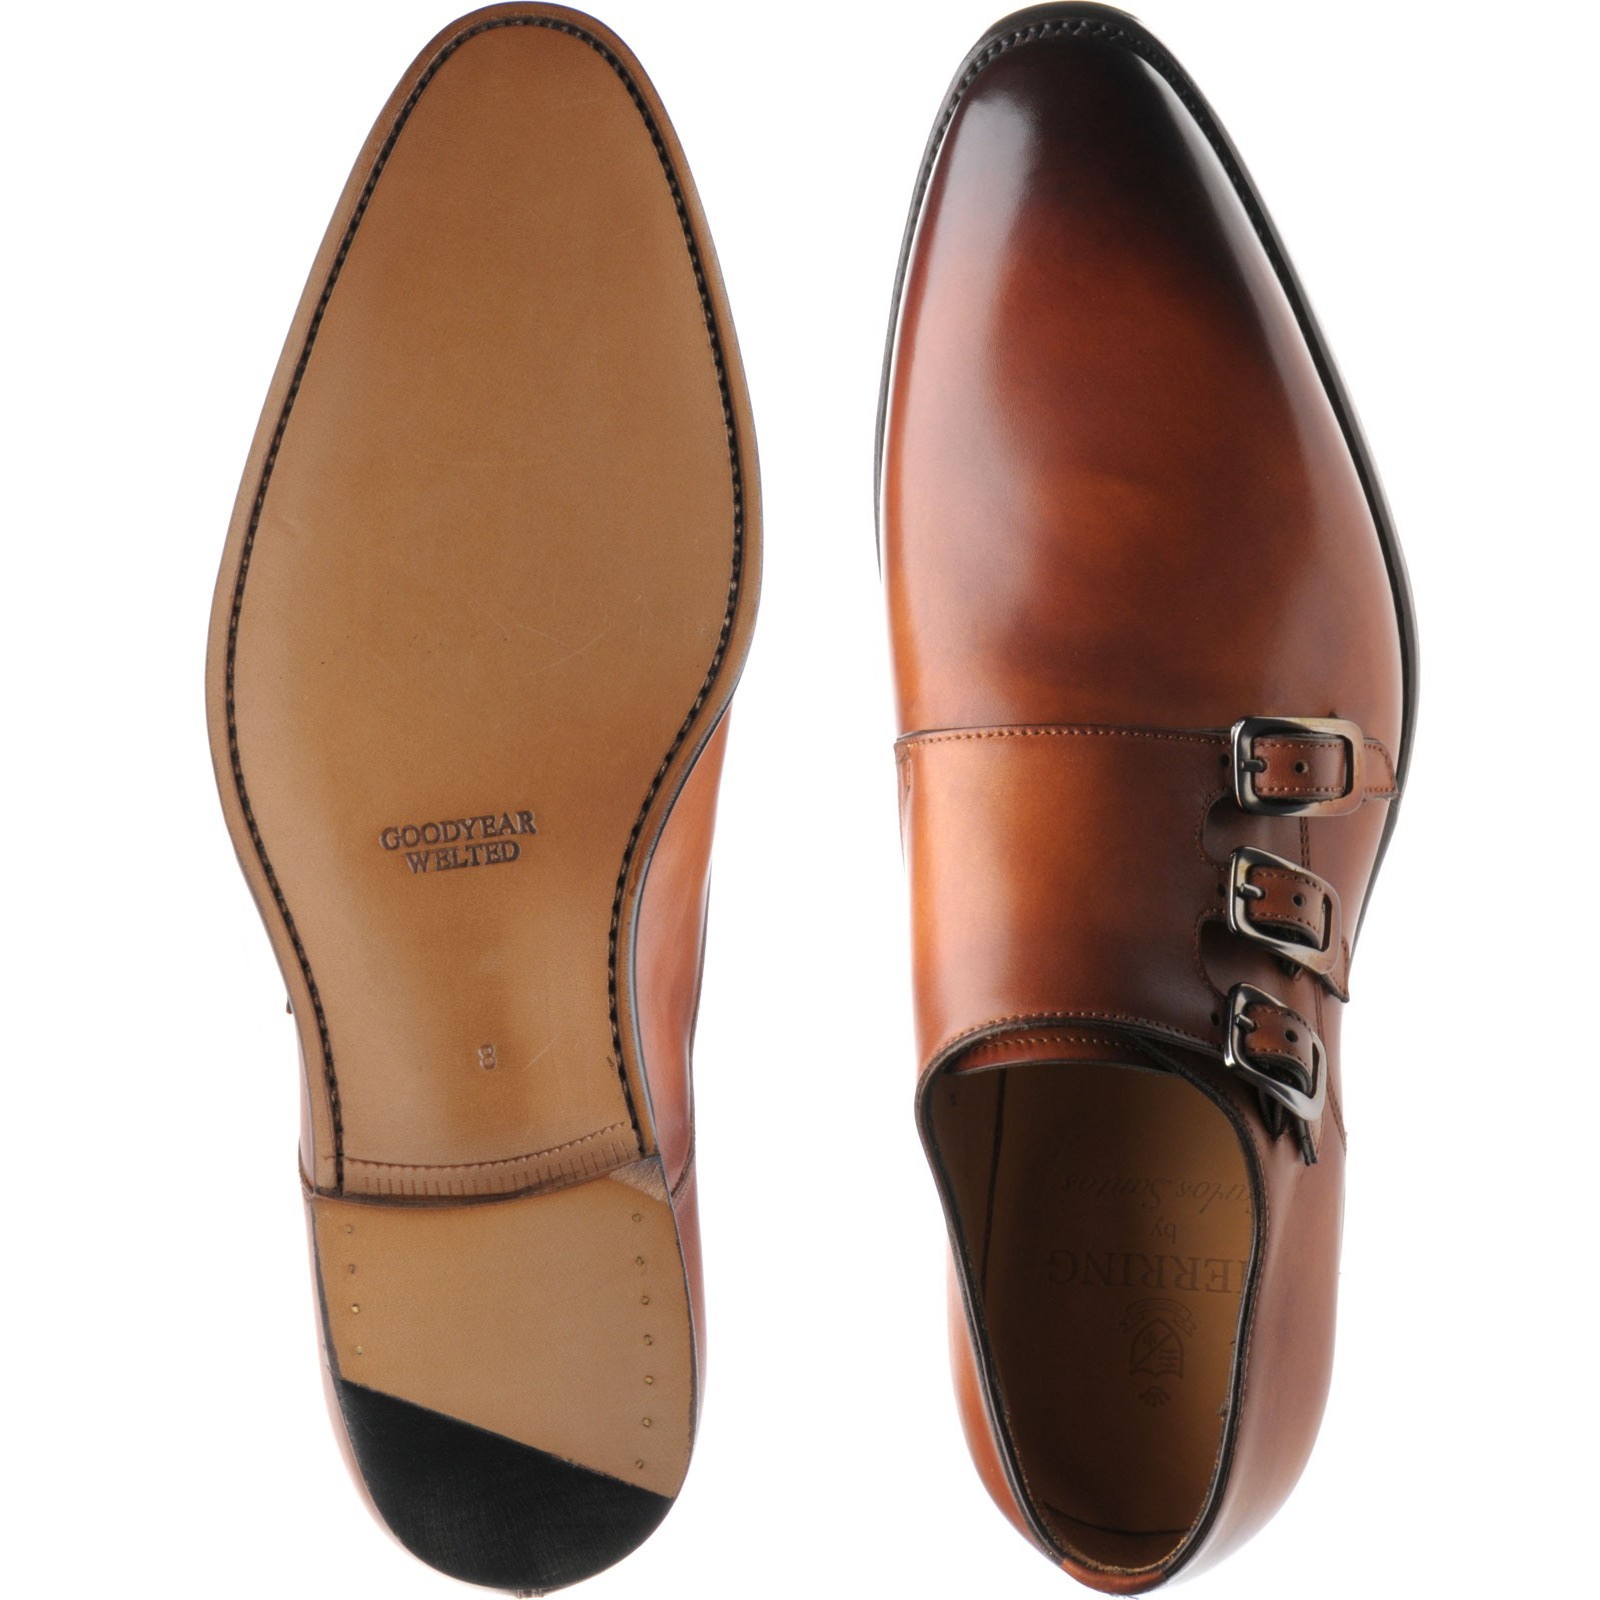 Herring shoes | Herring Classic | Dahl in Chestnut Calf at Herring Shoes